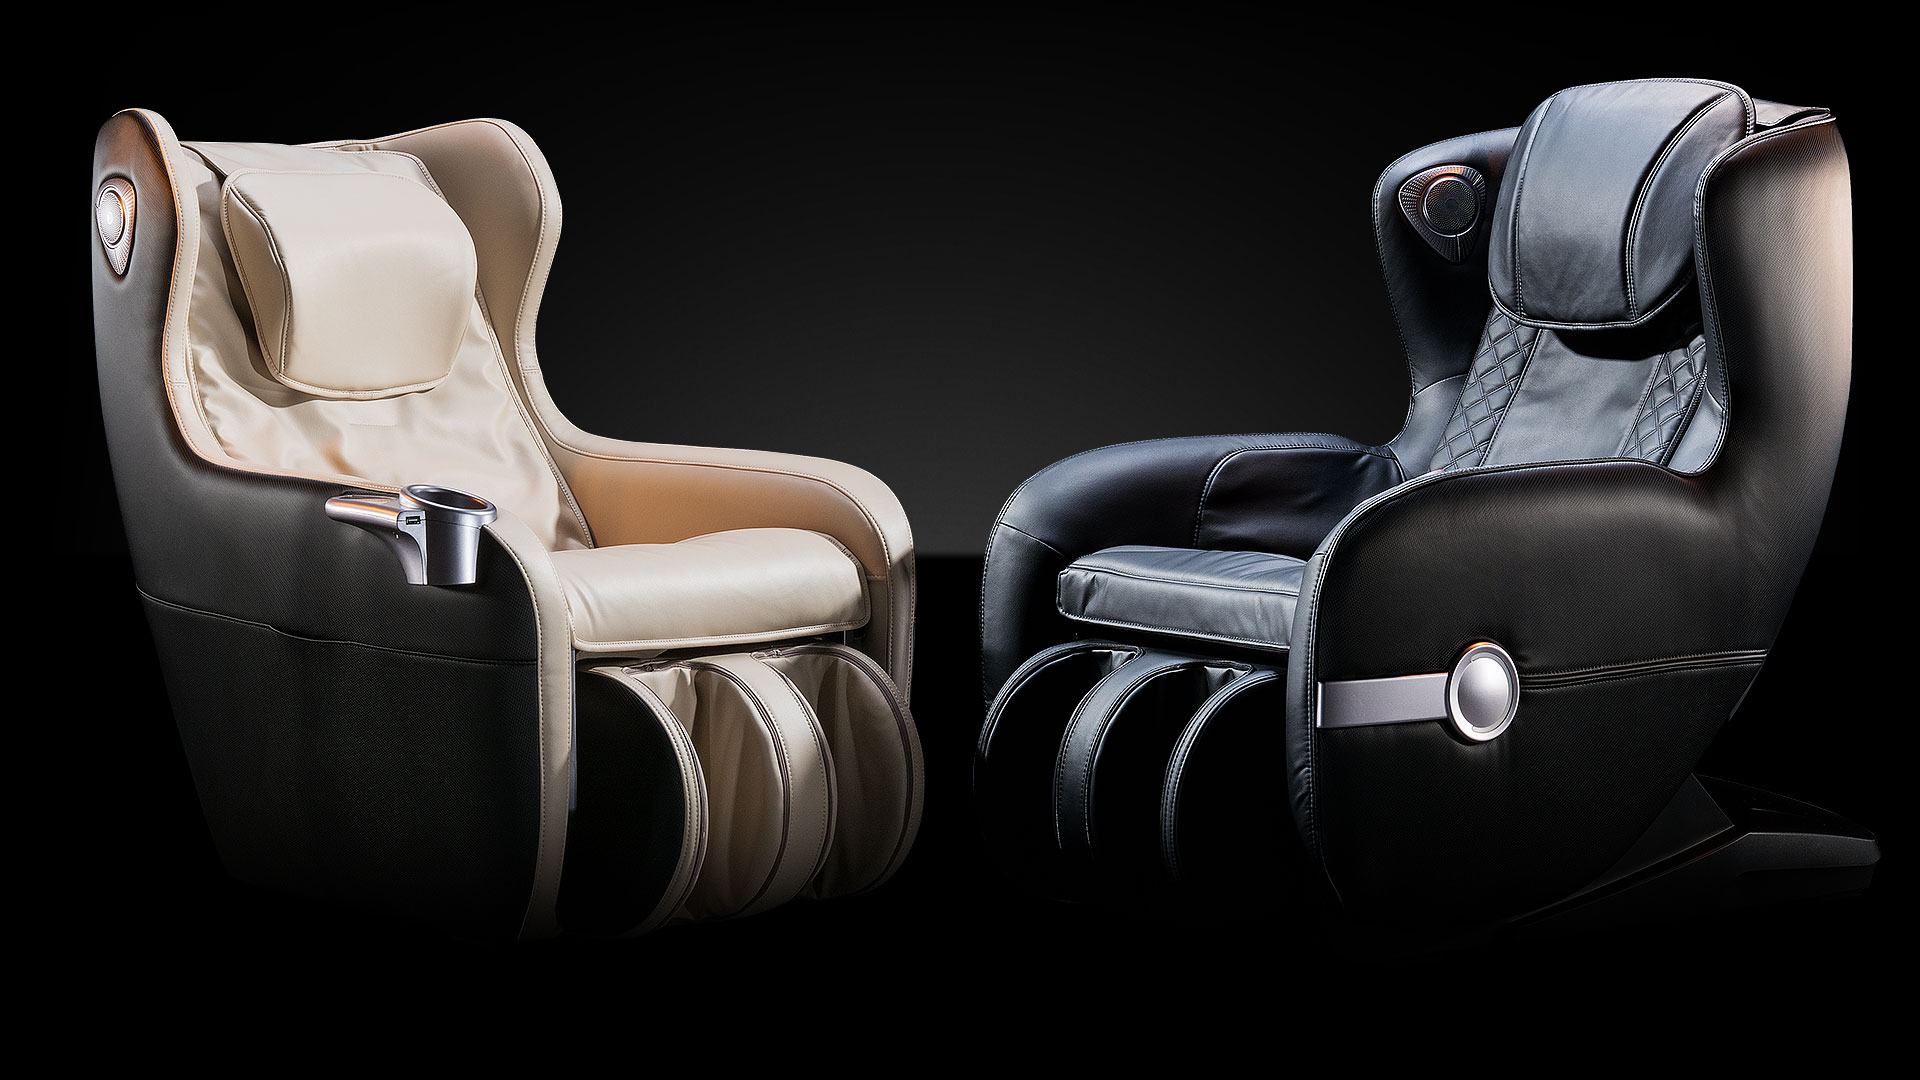 New chair with a massage Massaggio Ricco